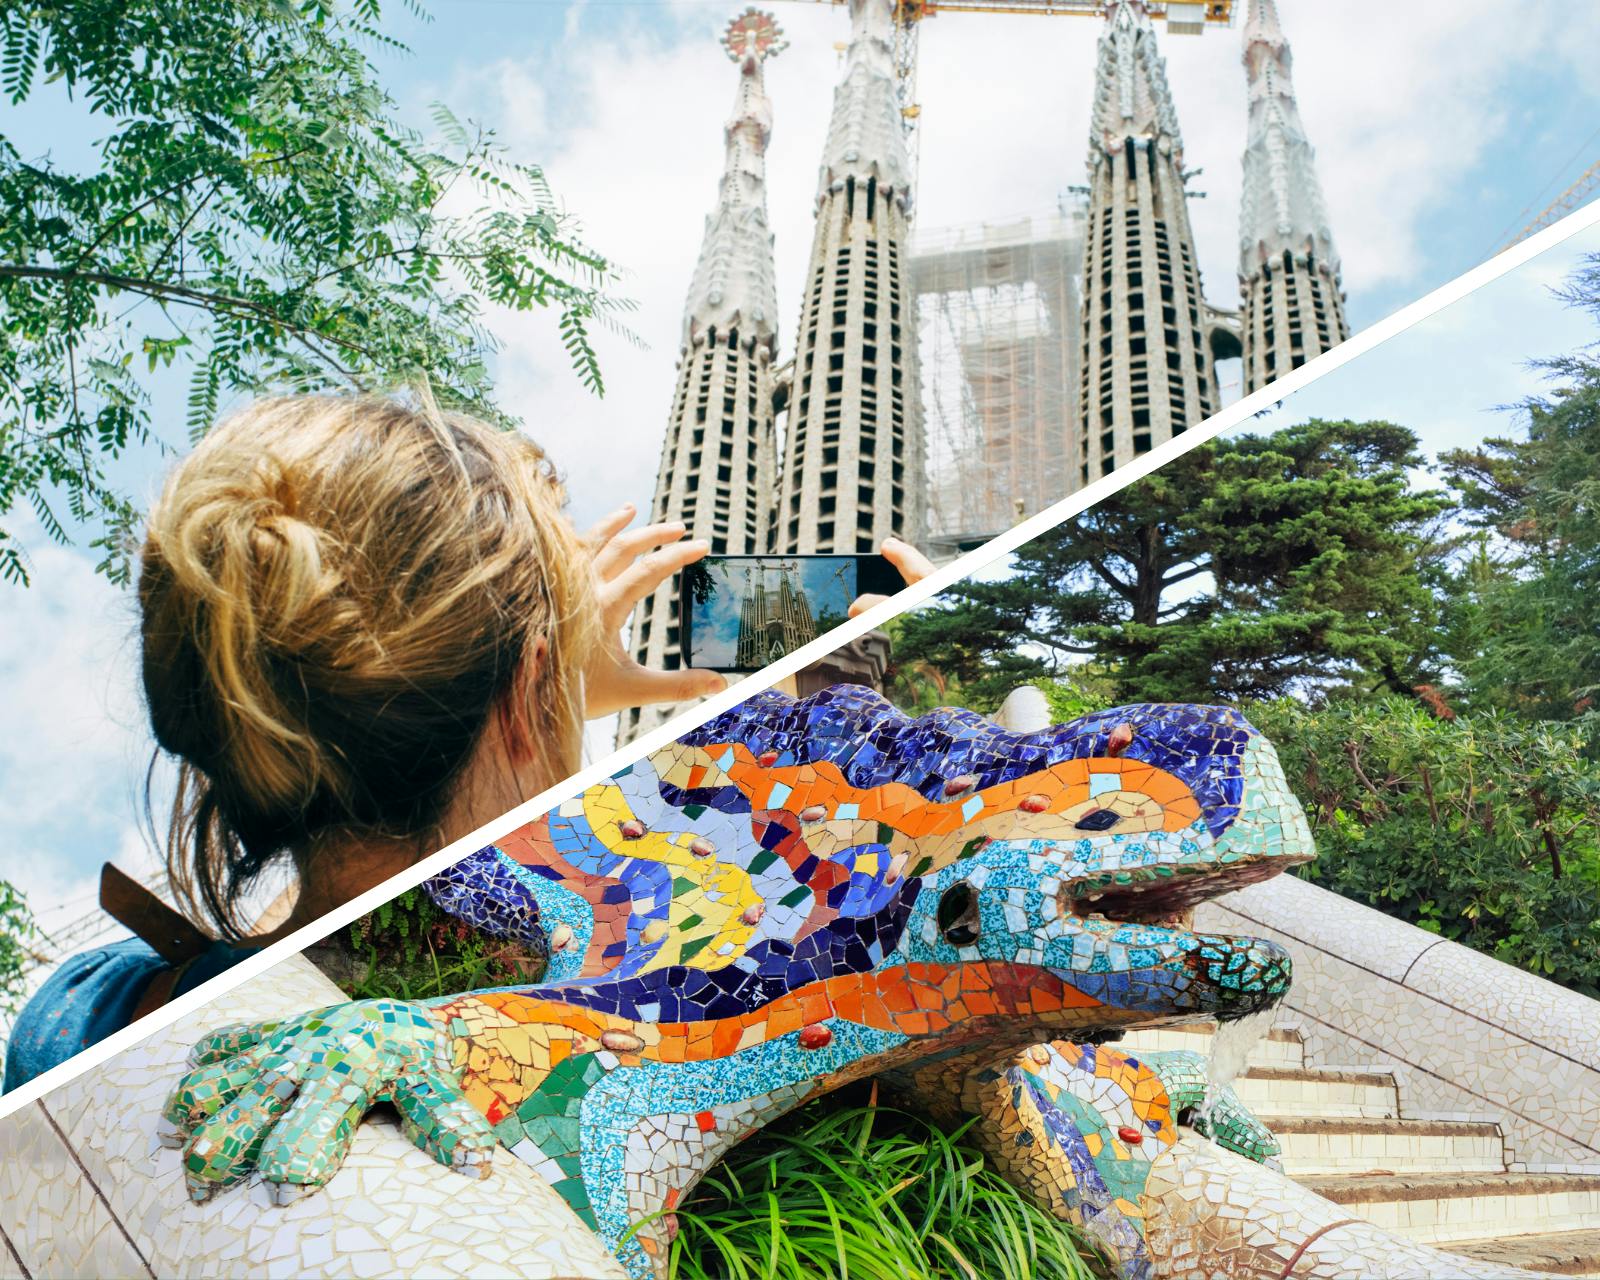 Barcelona combo tour with Sagrada Familia and Park Güell Musement